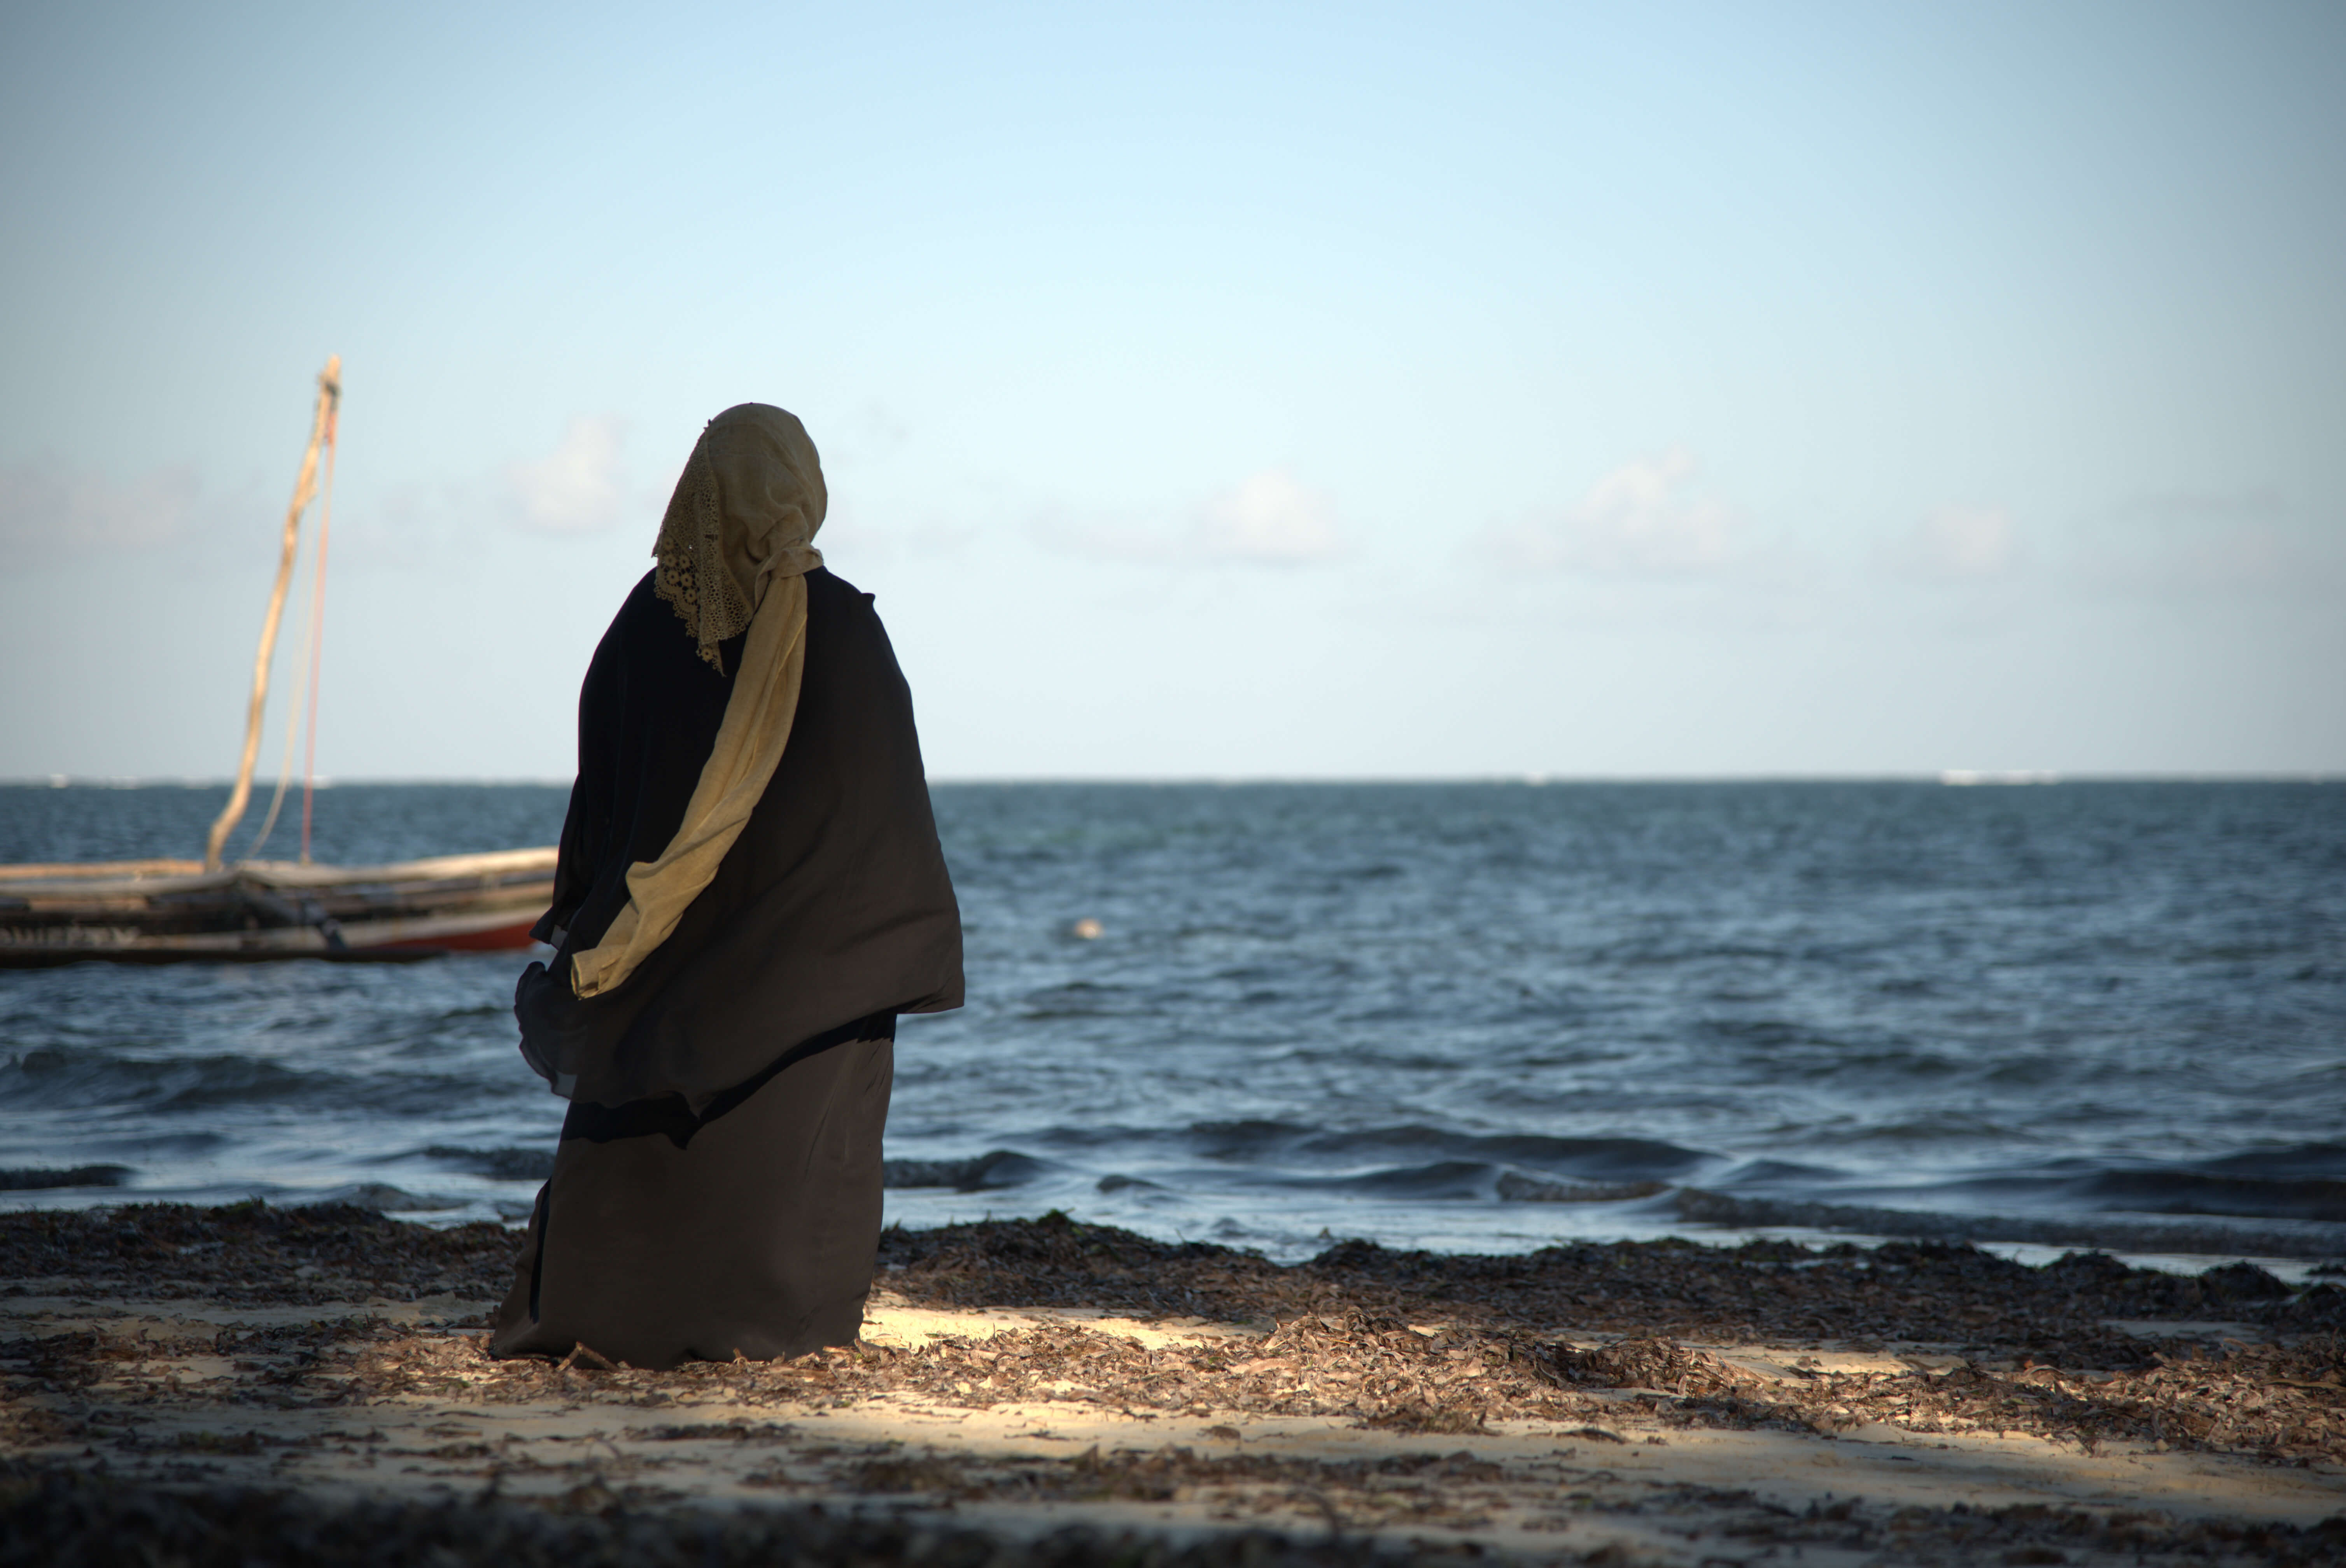 Human trafficking survivor stands at the shoreline